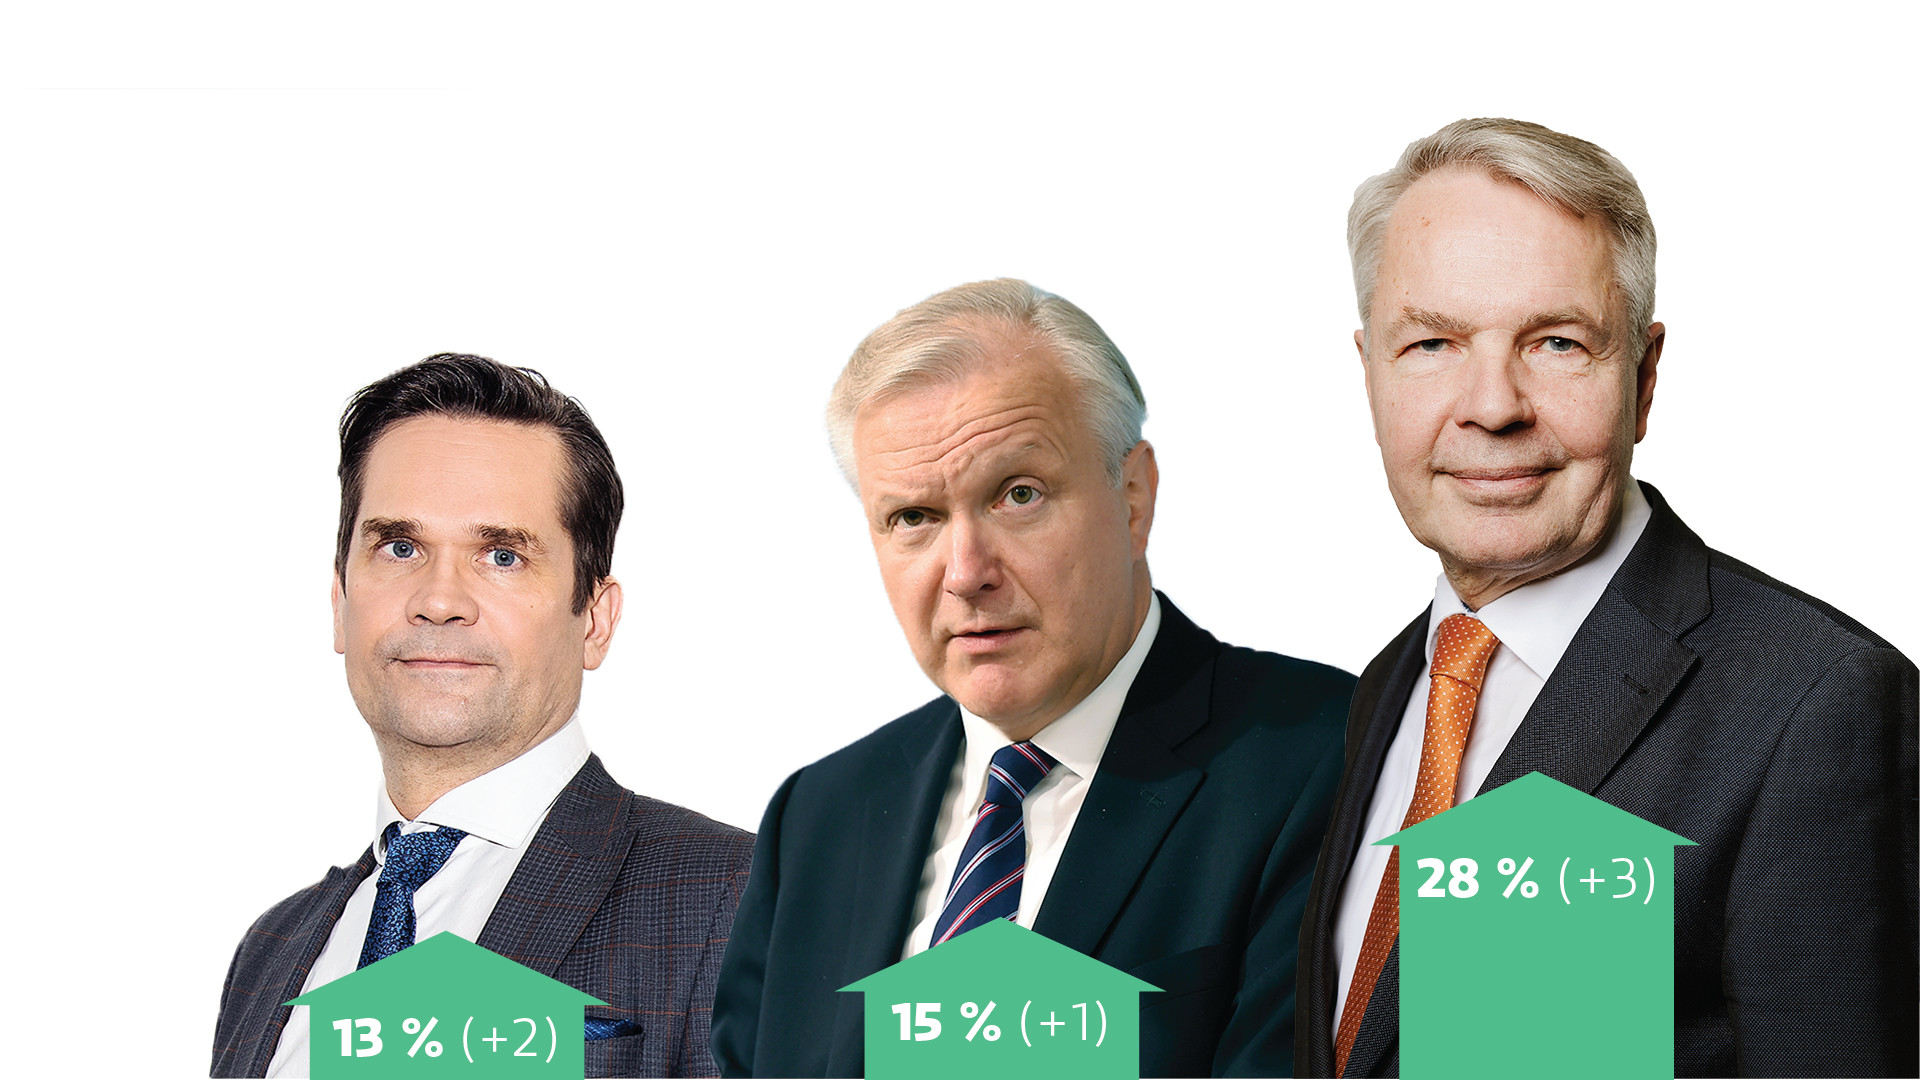 Pekka Haavisto는 Yle의 가장 최근 대통령 선거에서 강력한 우위를 점하고 있습니다.